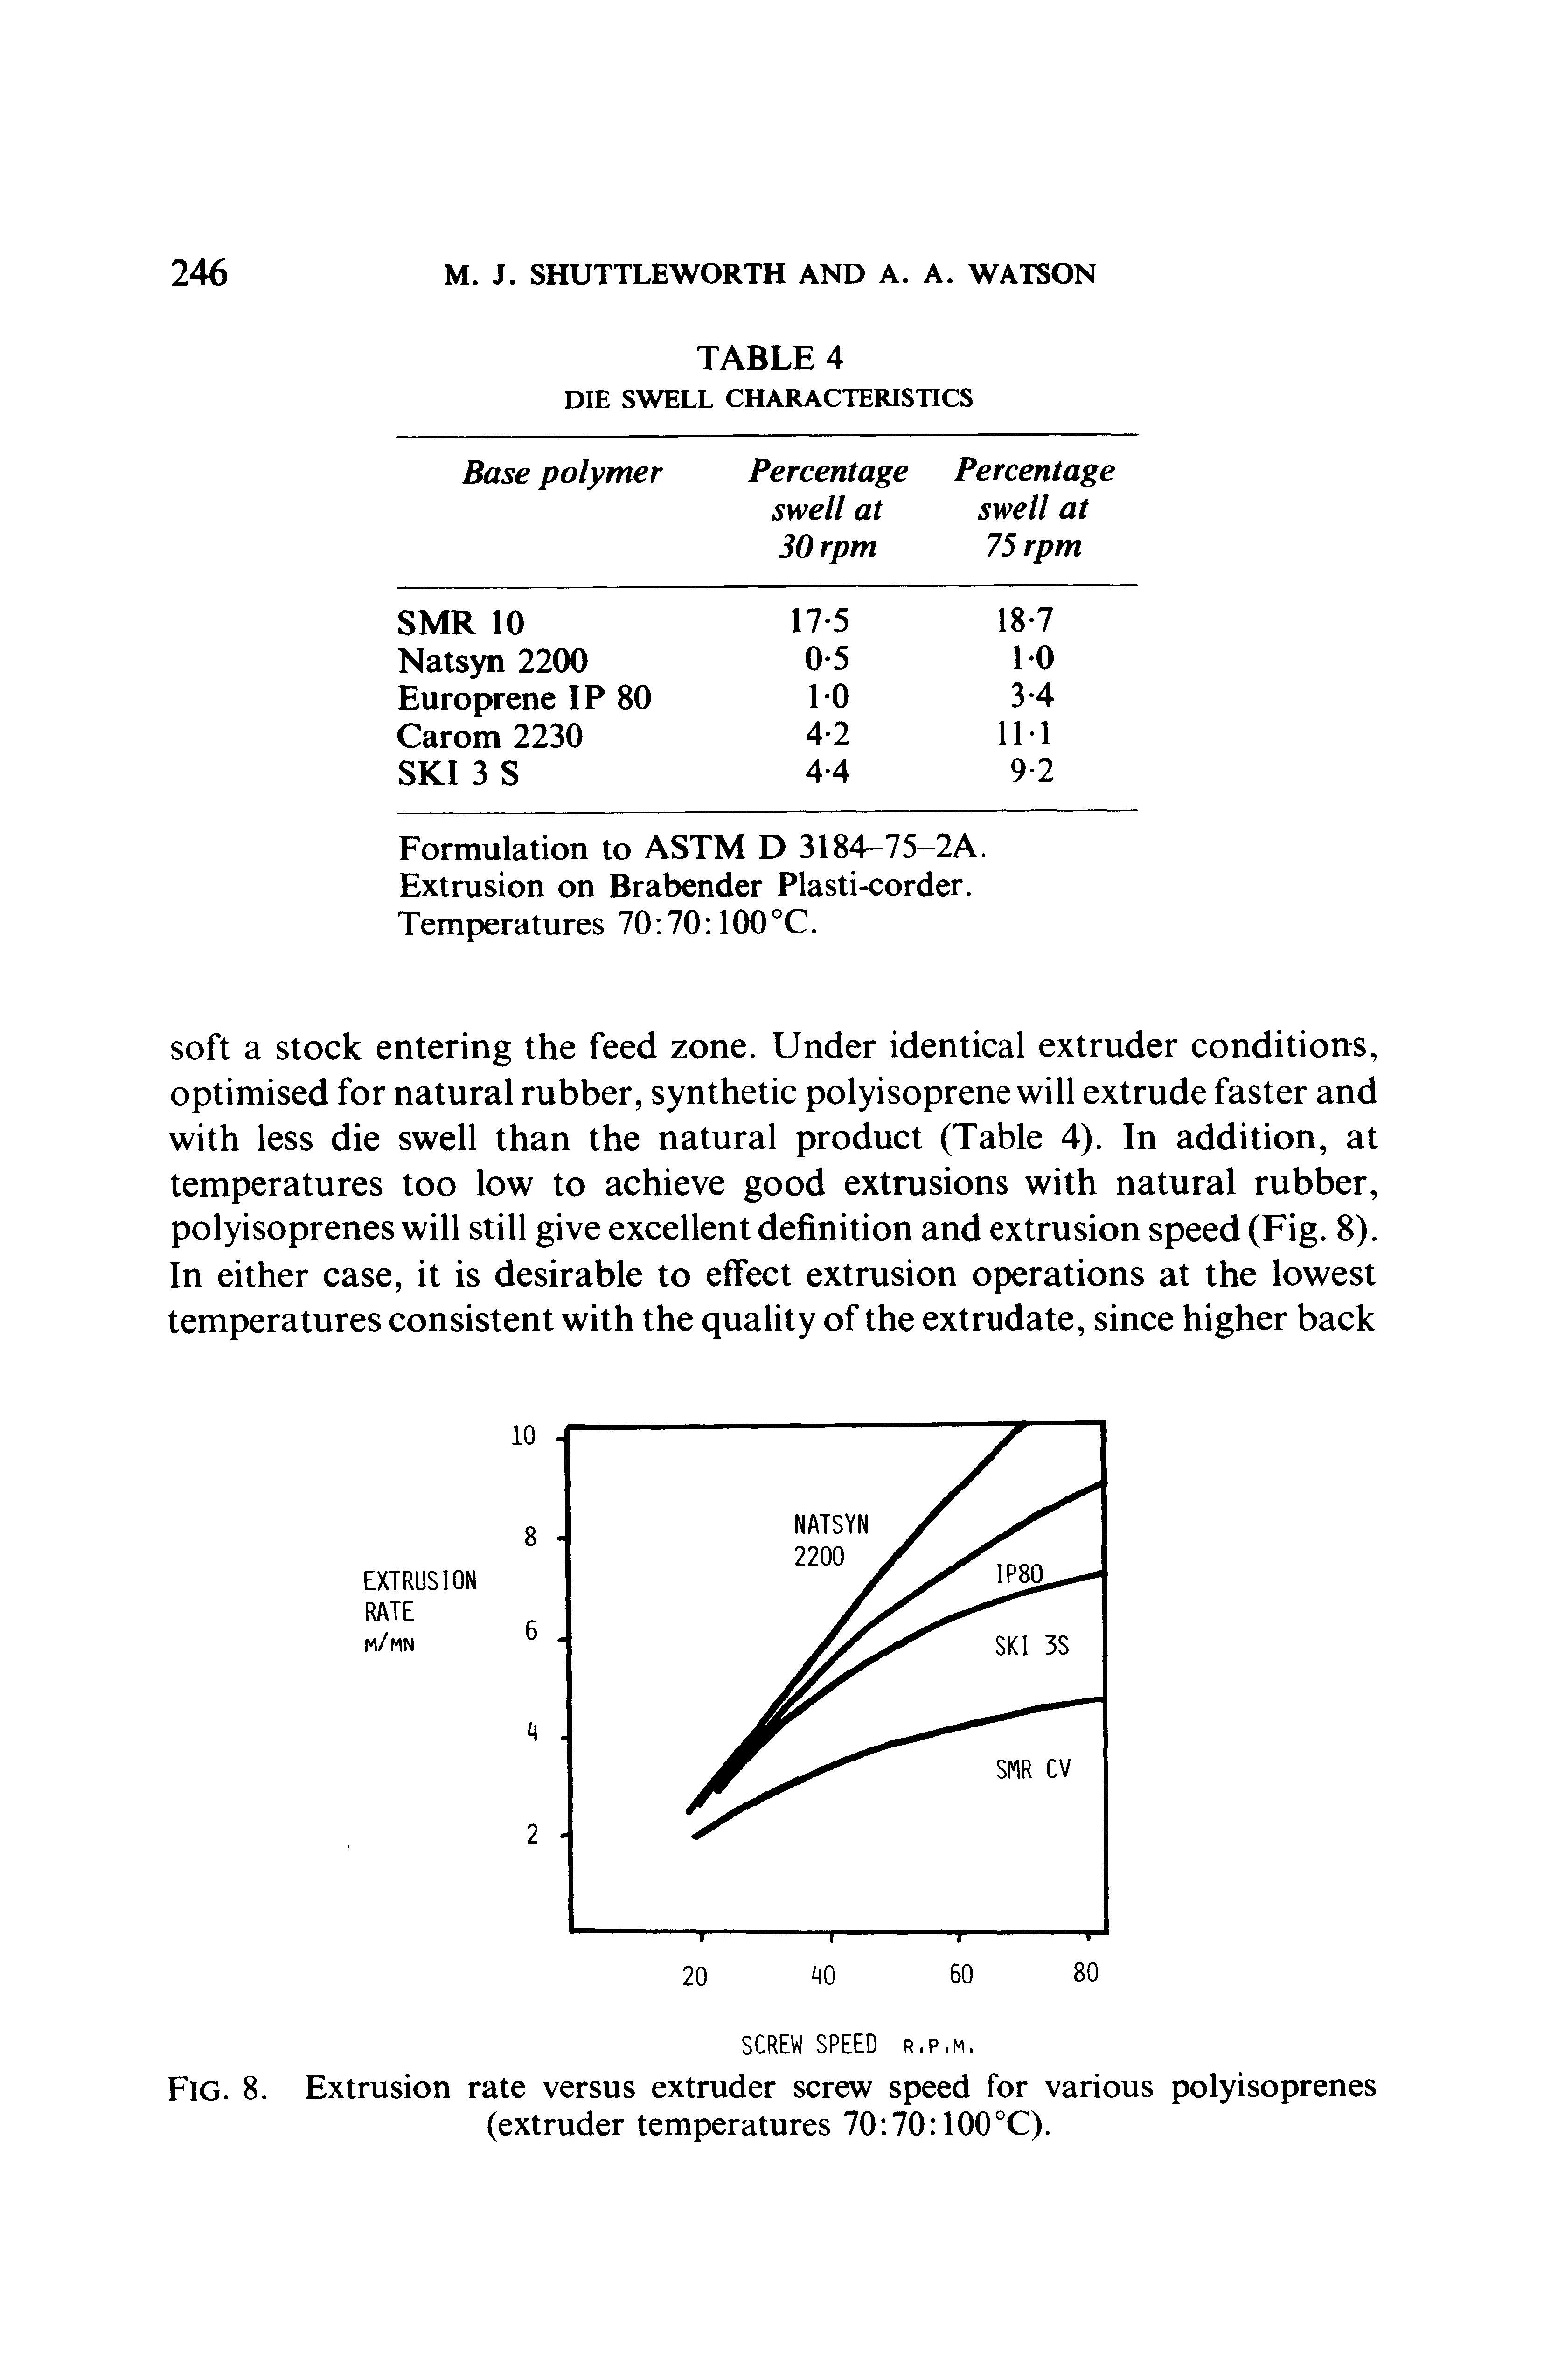 Fig. 8. Extrusion rate versus extruder screw speed for various polyisoprenes (extruder temperatures 70 70 100°C).